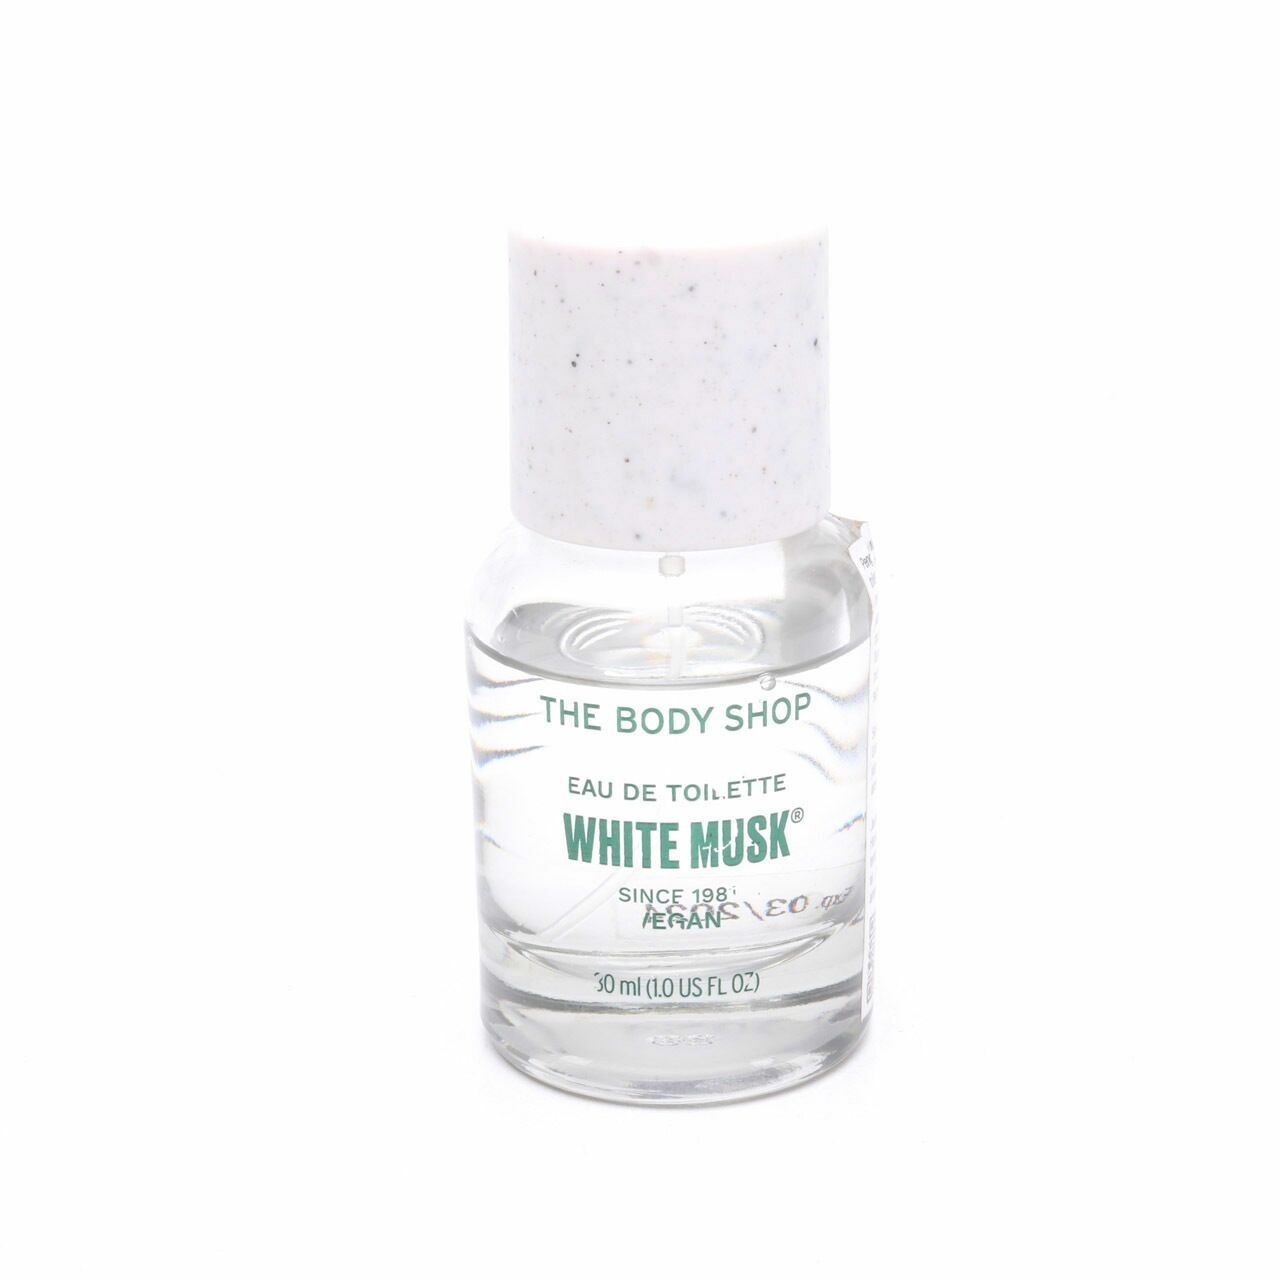 The Body Shop White Musk Eau De Toilette Fragrance